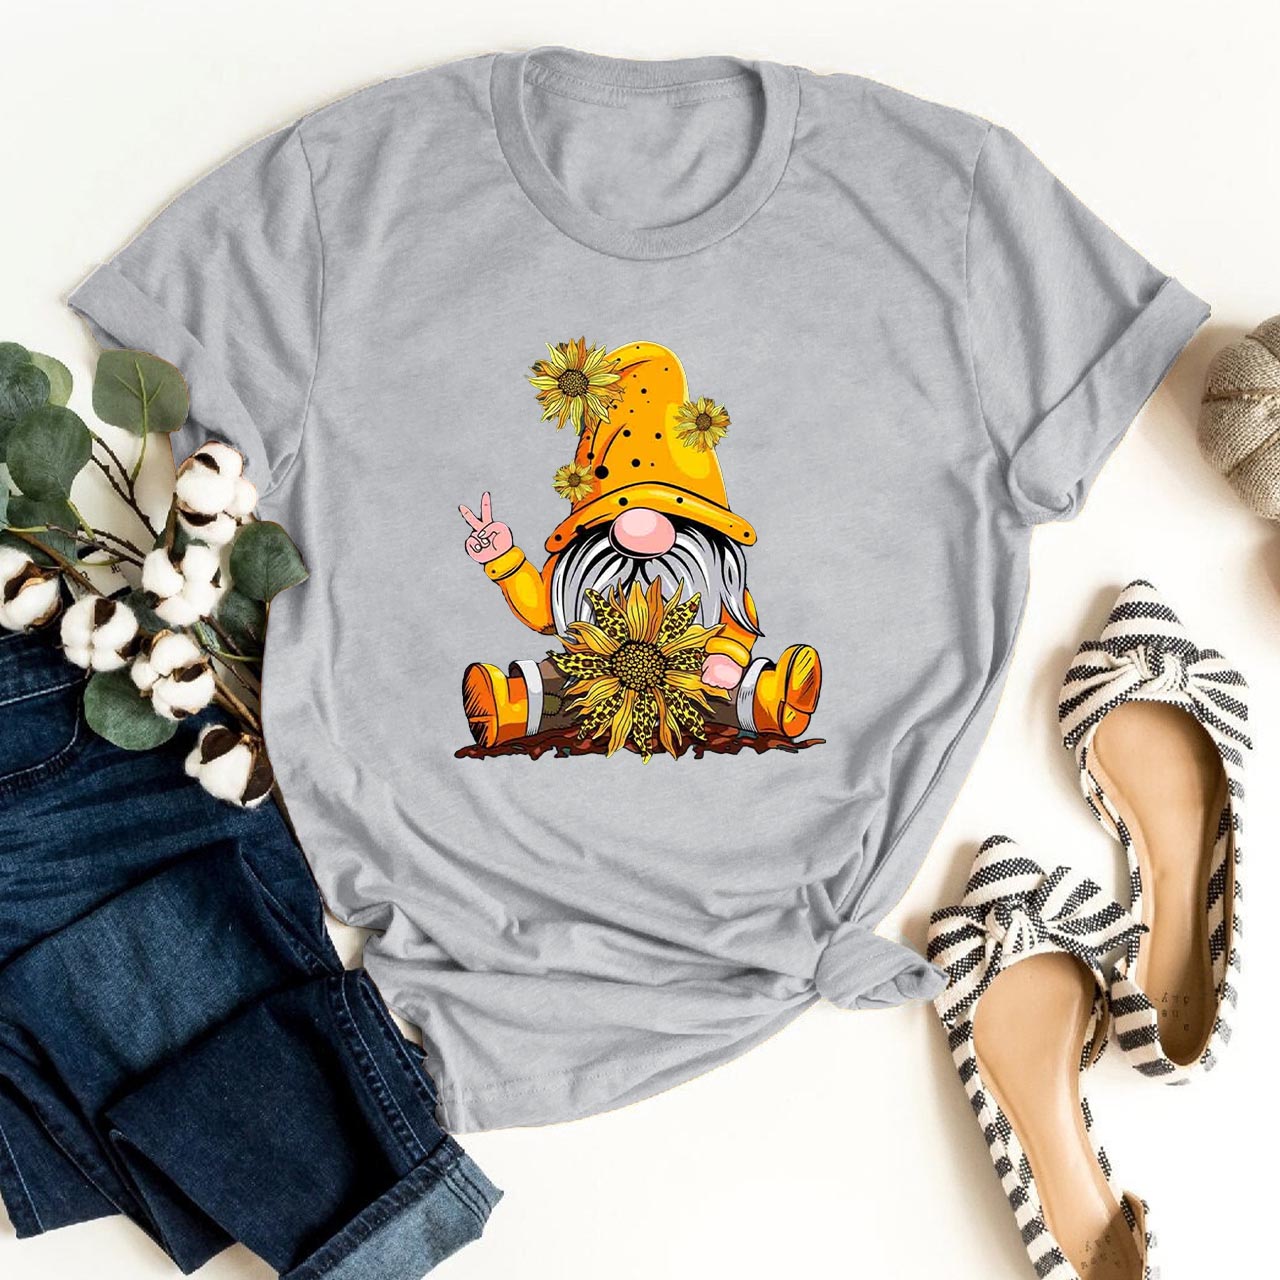 Super Cute Sunflower Gnome Shirts